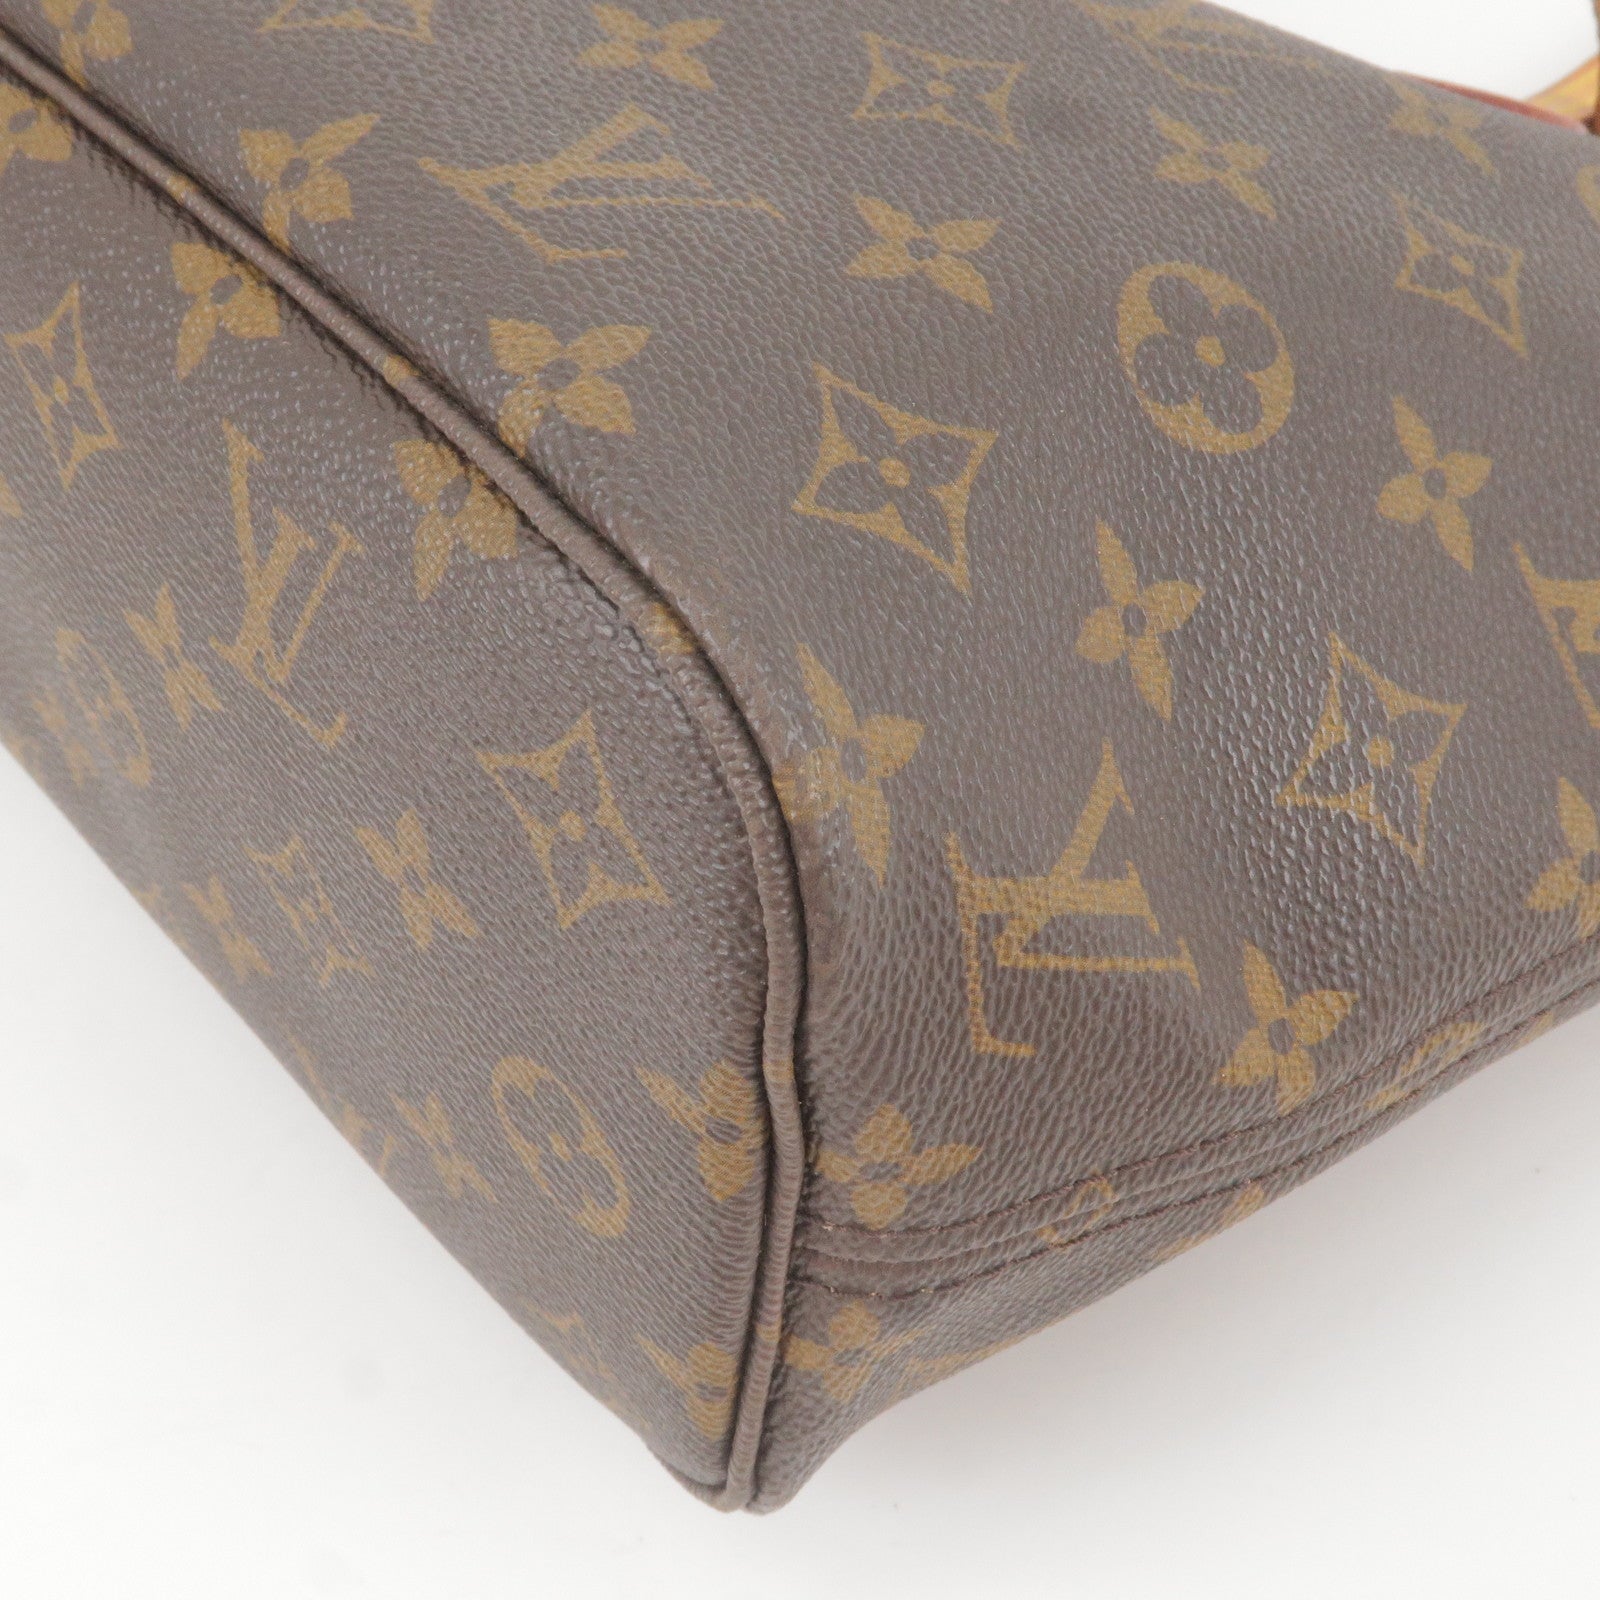 Louis Vuitton Monogram Neverfull PM Tote Bag